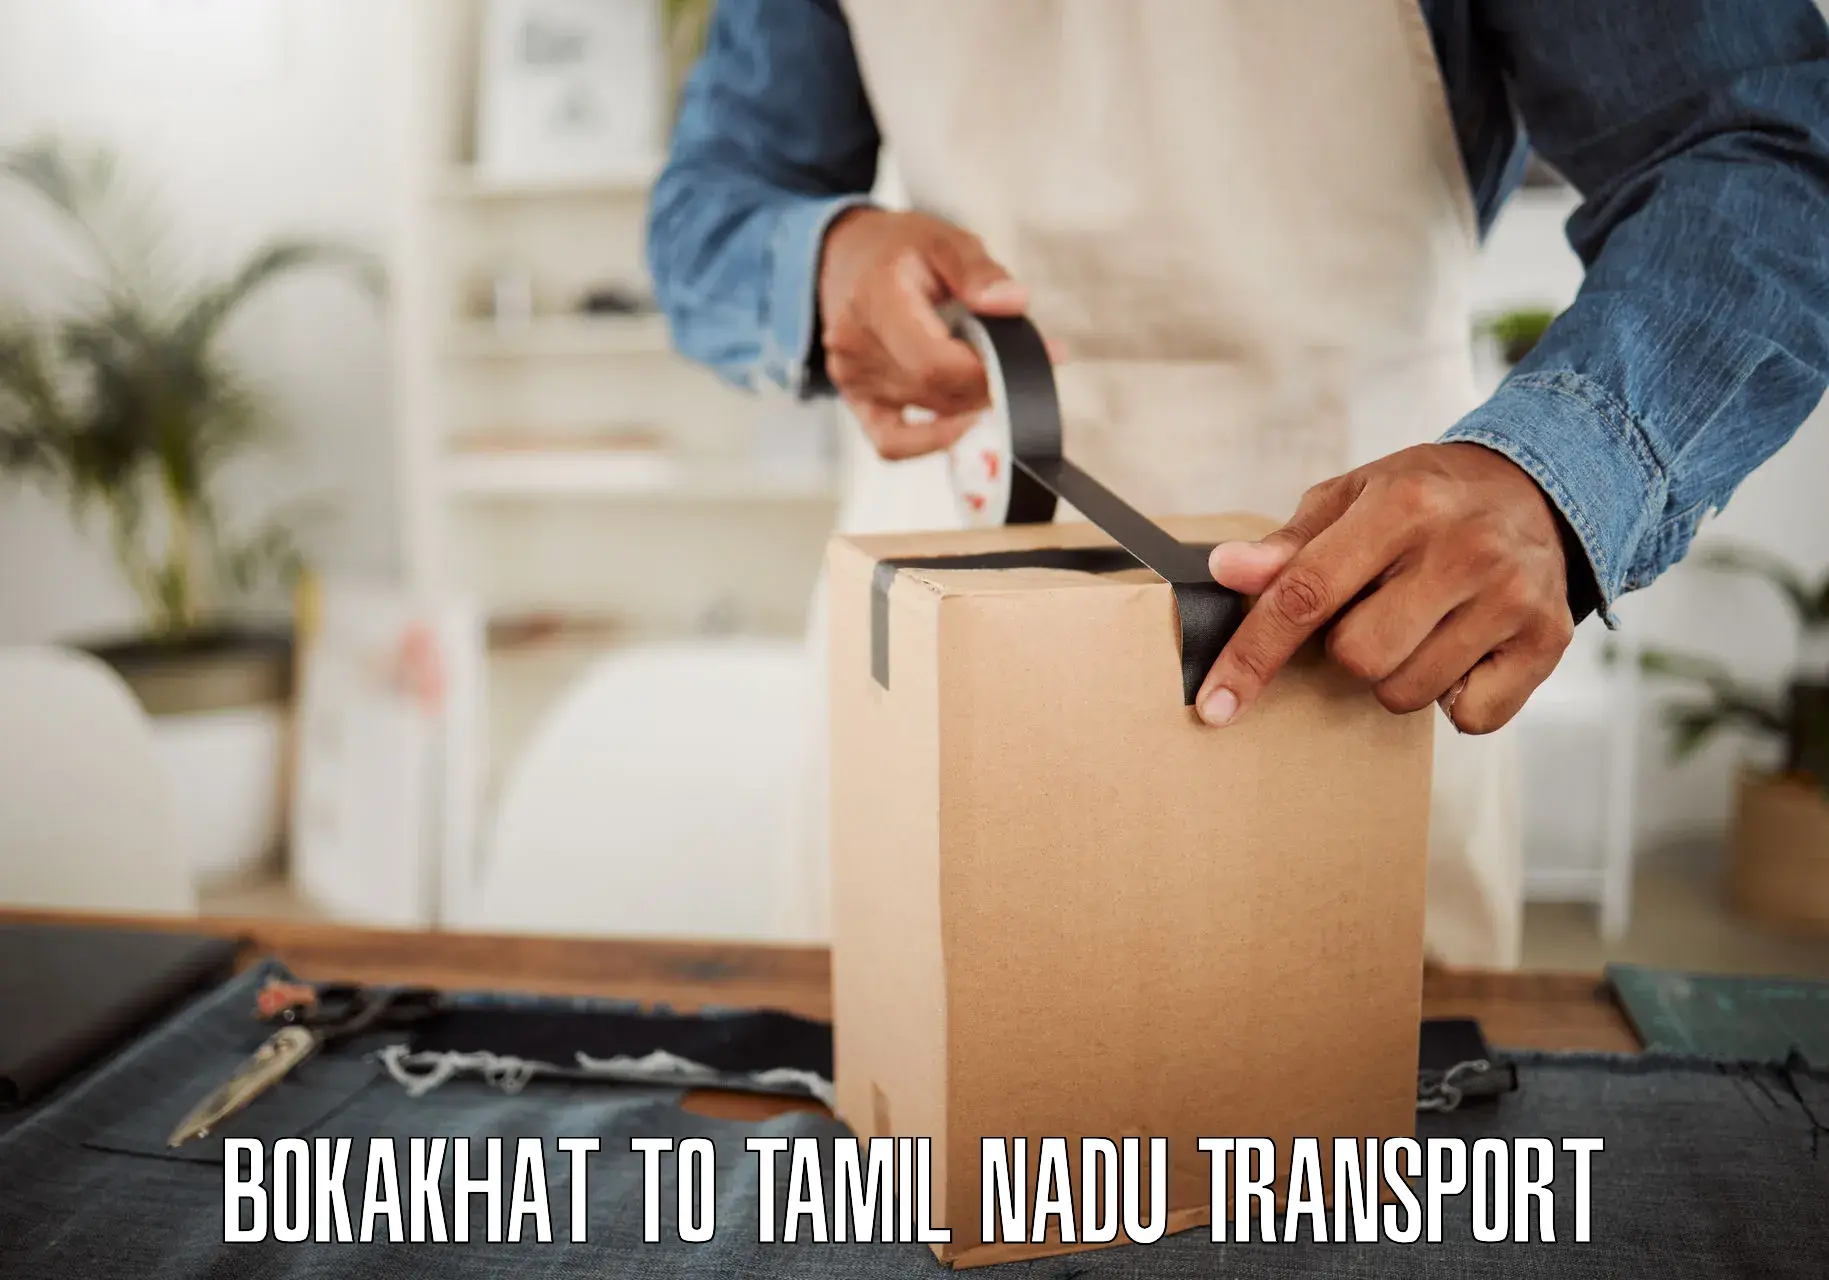 Domestic goods transportation services Bokakhat to Thiruvadanai